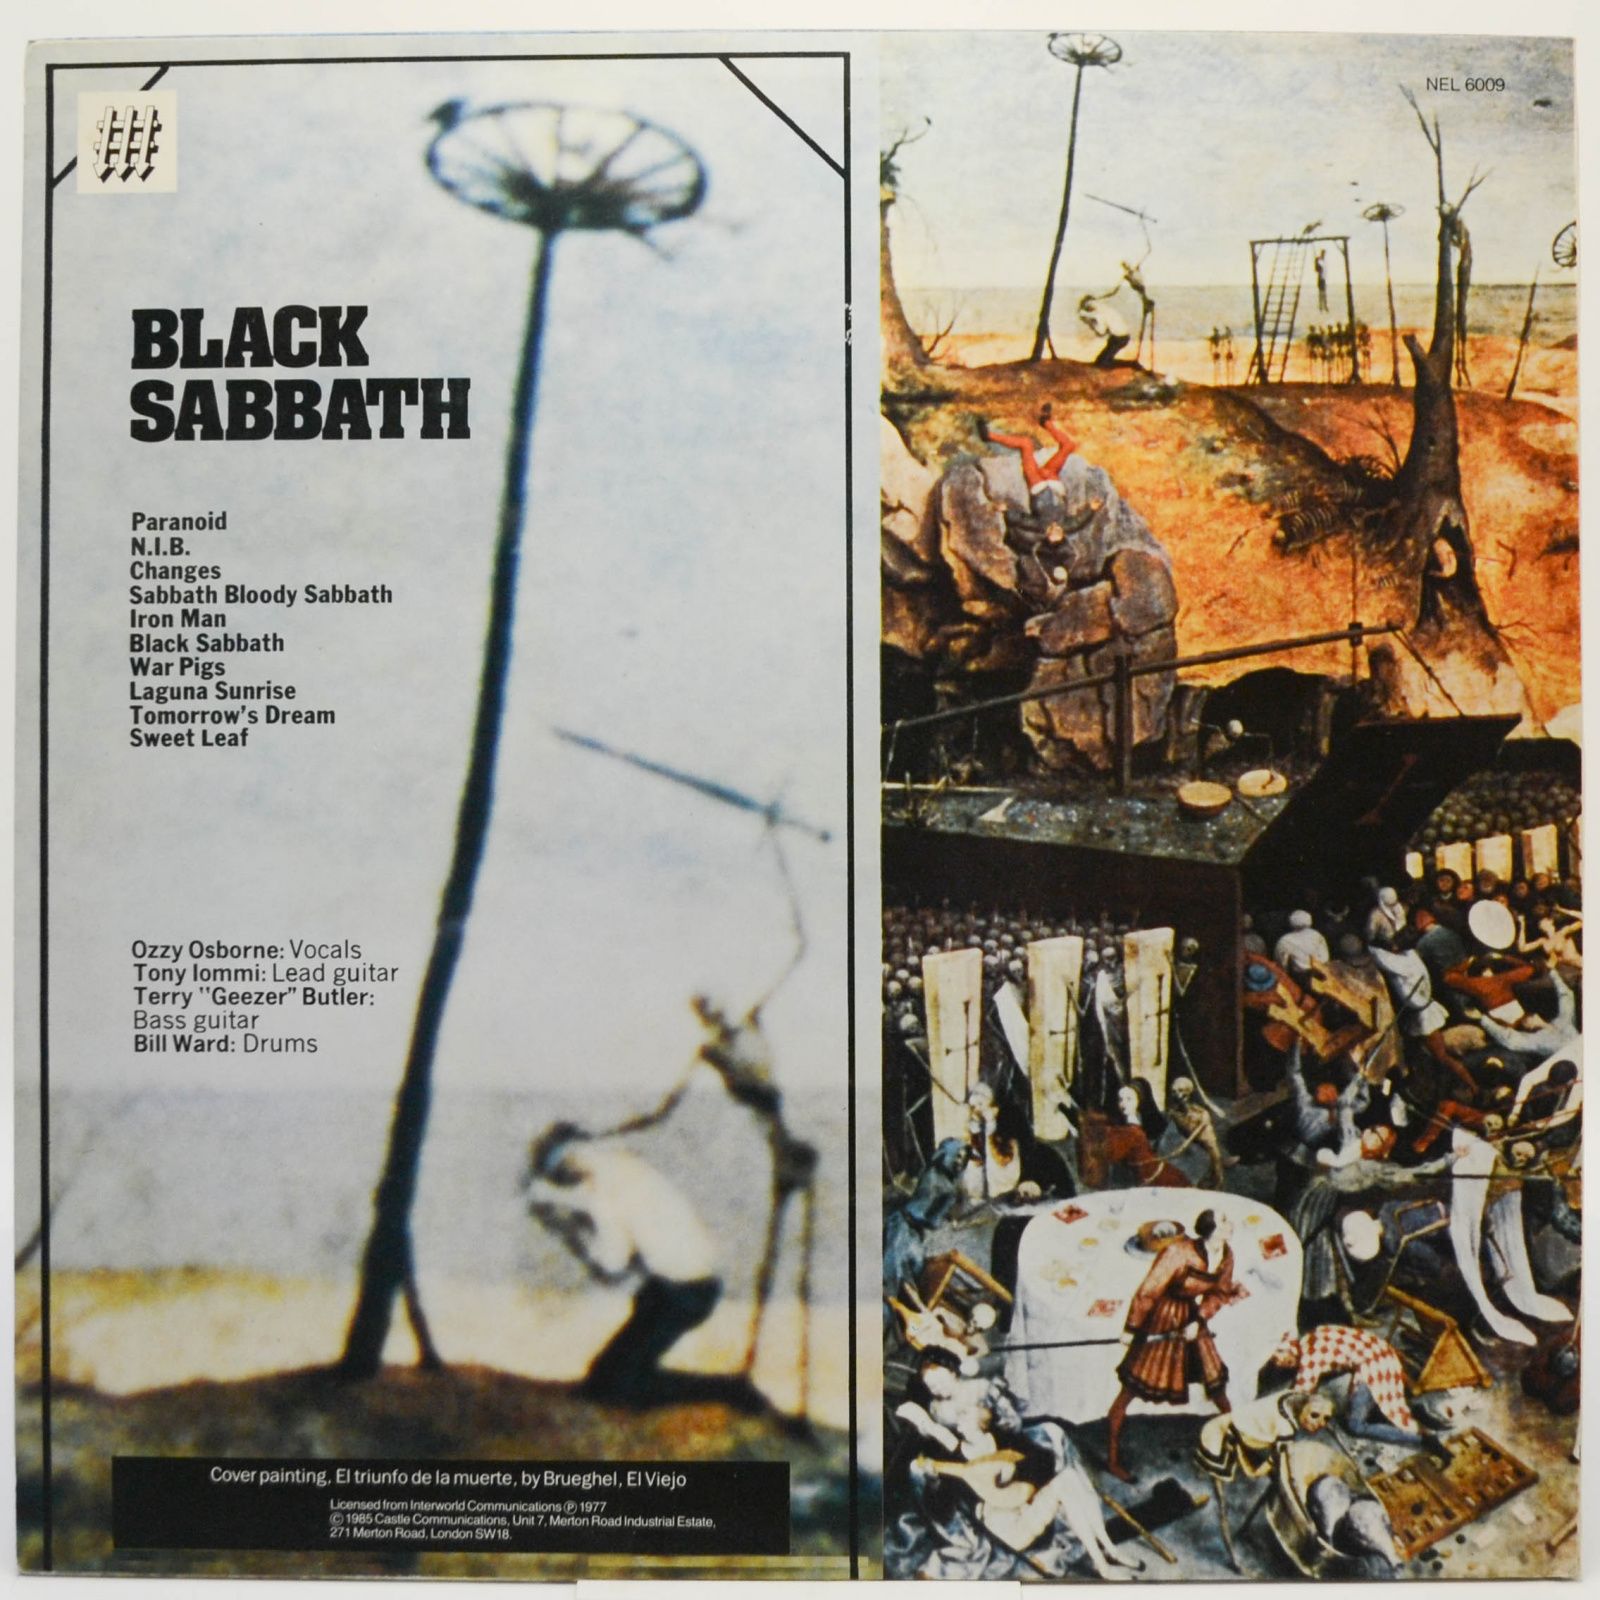 Black Sabbath — Greatest Hits, 1977